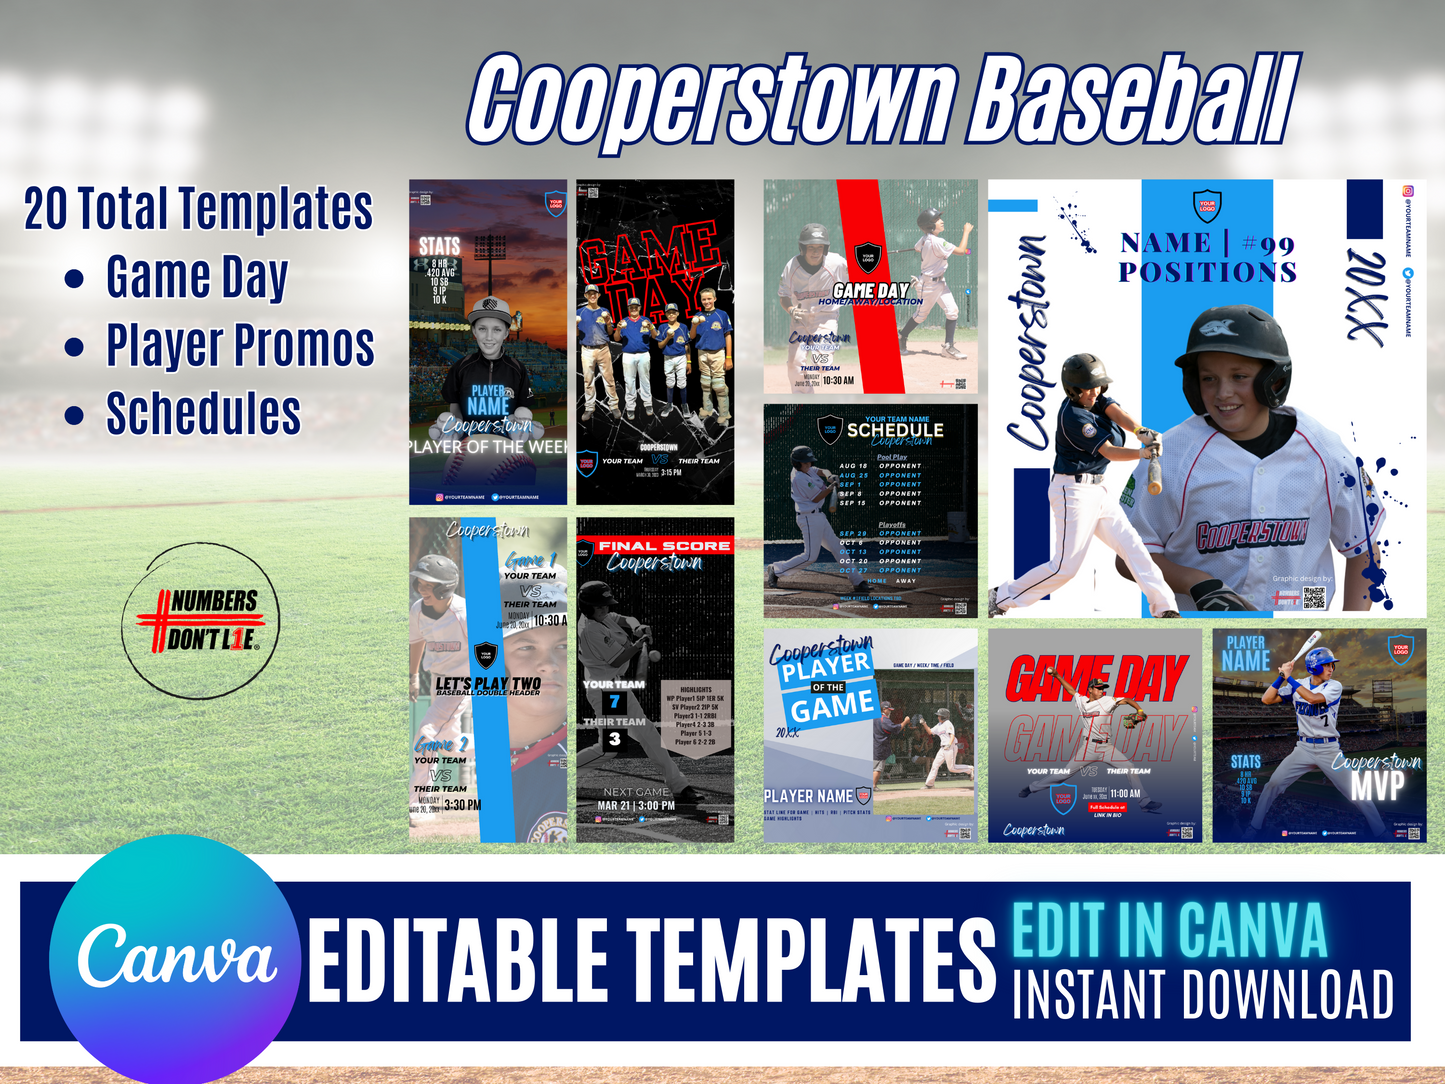 DIY Cooperstown Baseball Canva Templates for Social Media